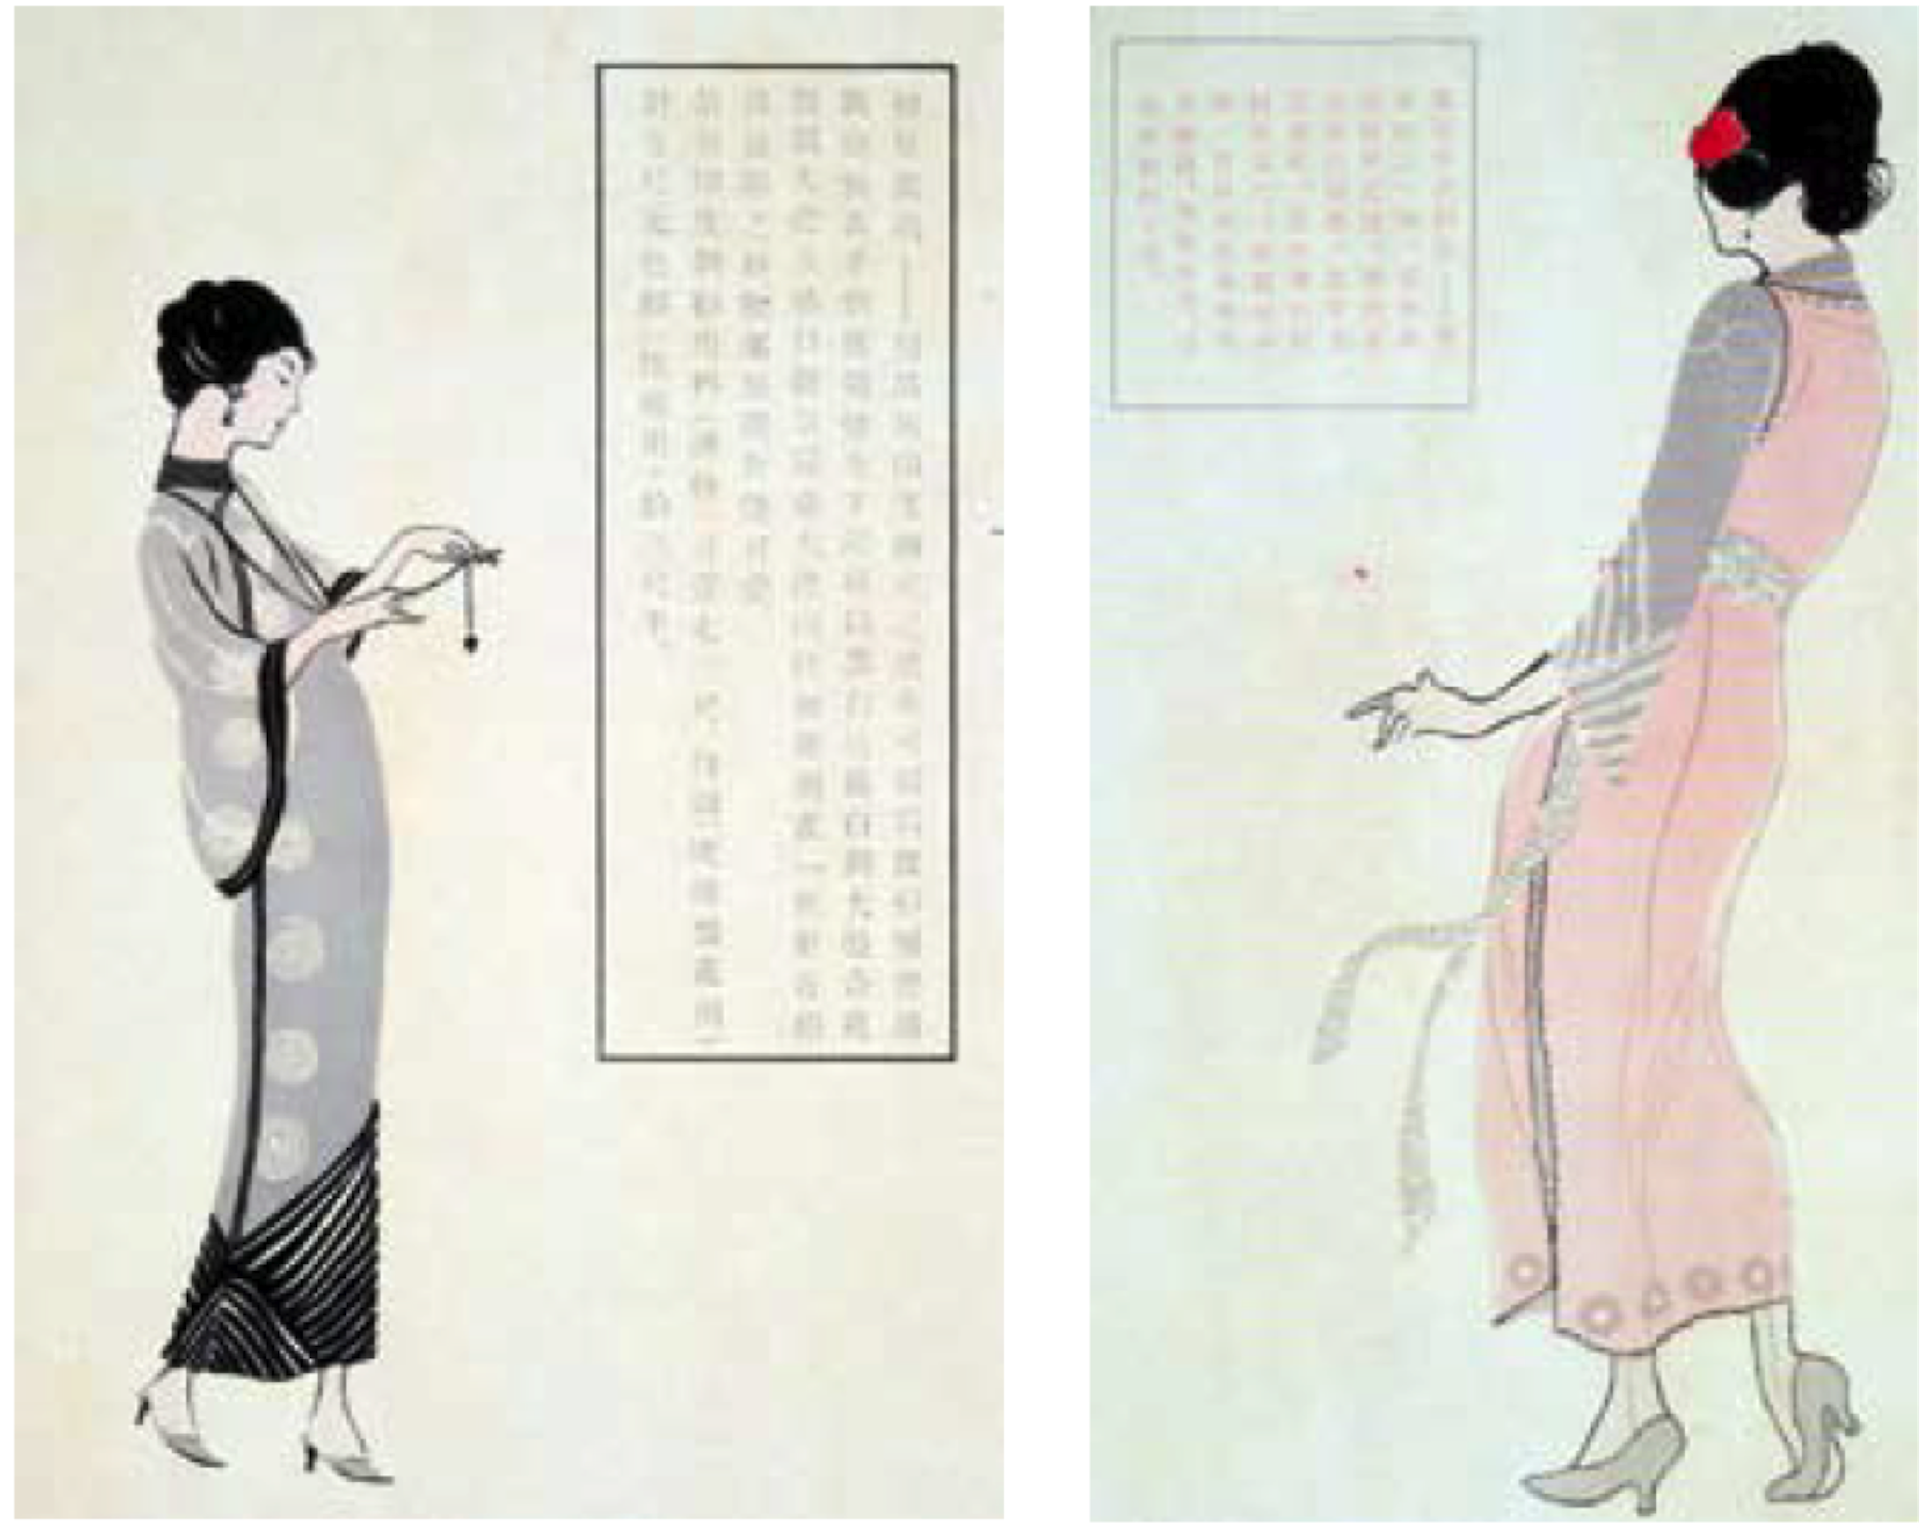 Chinese dress set off a cultural debate ...